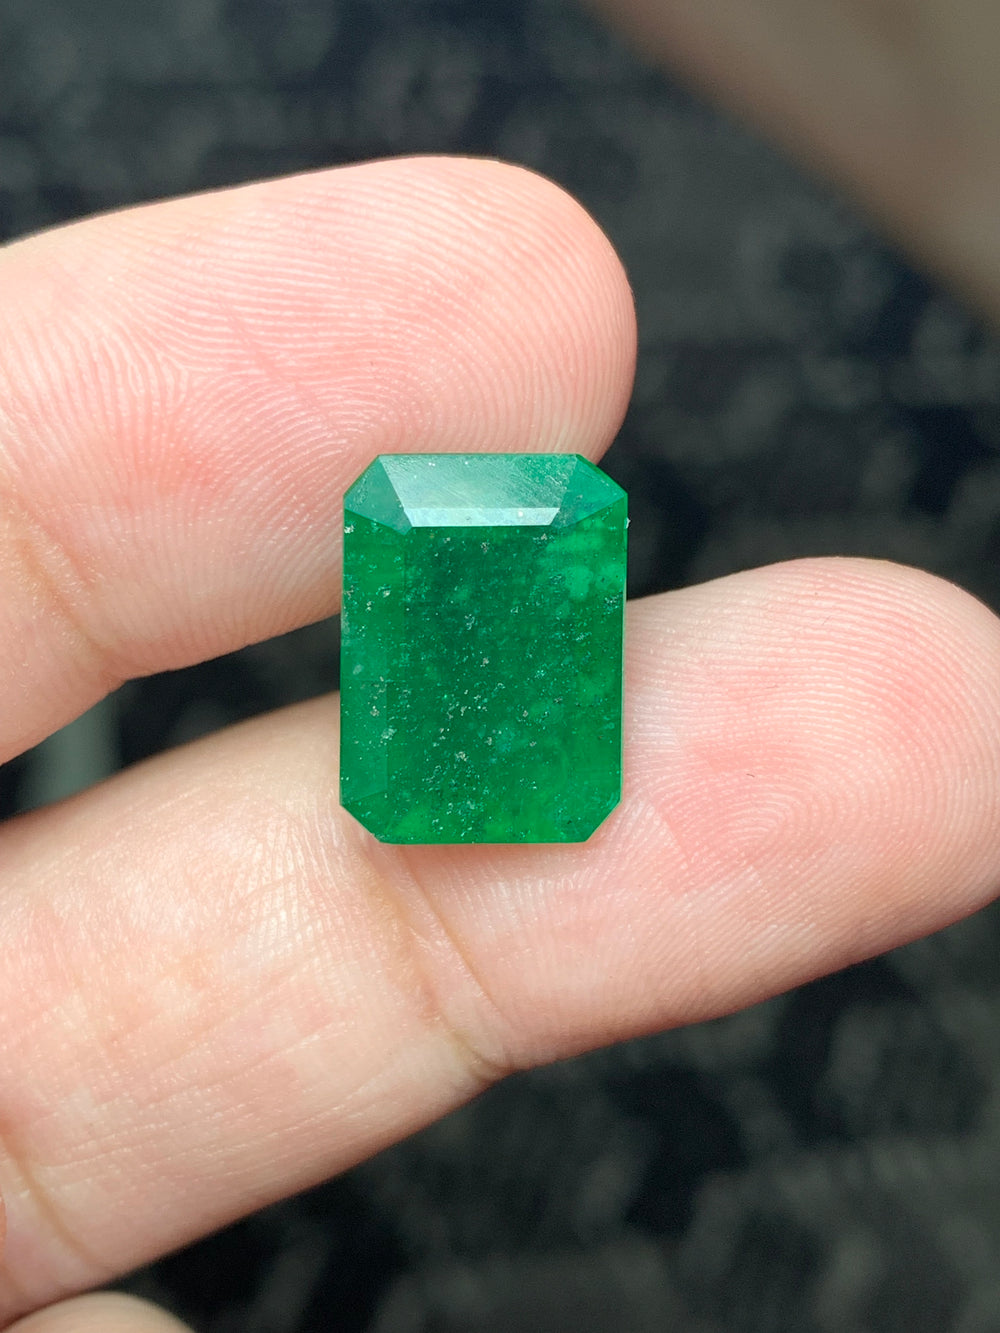 loose emerald